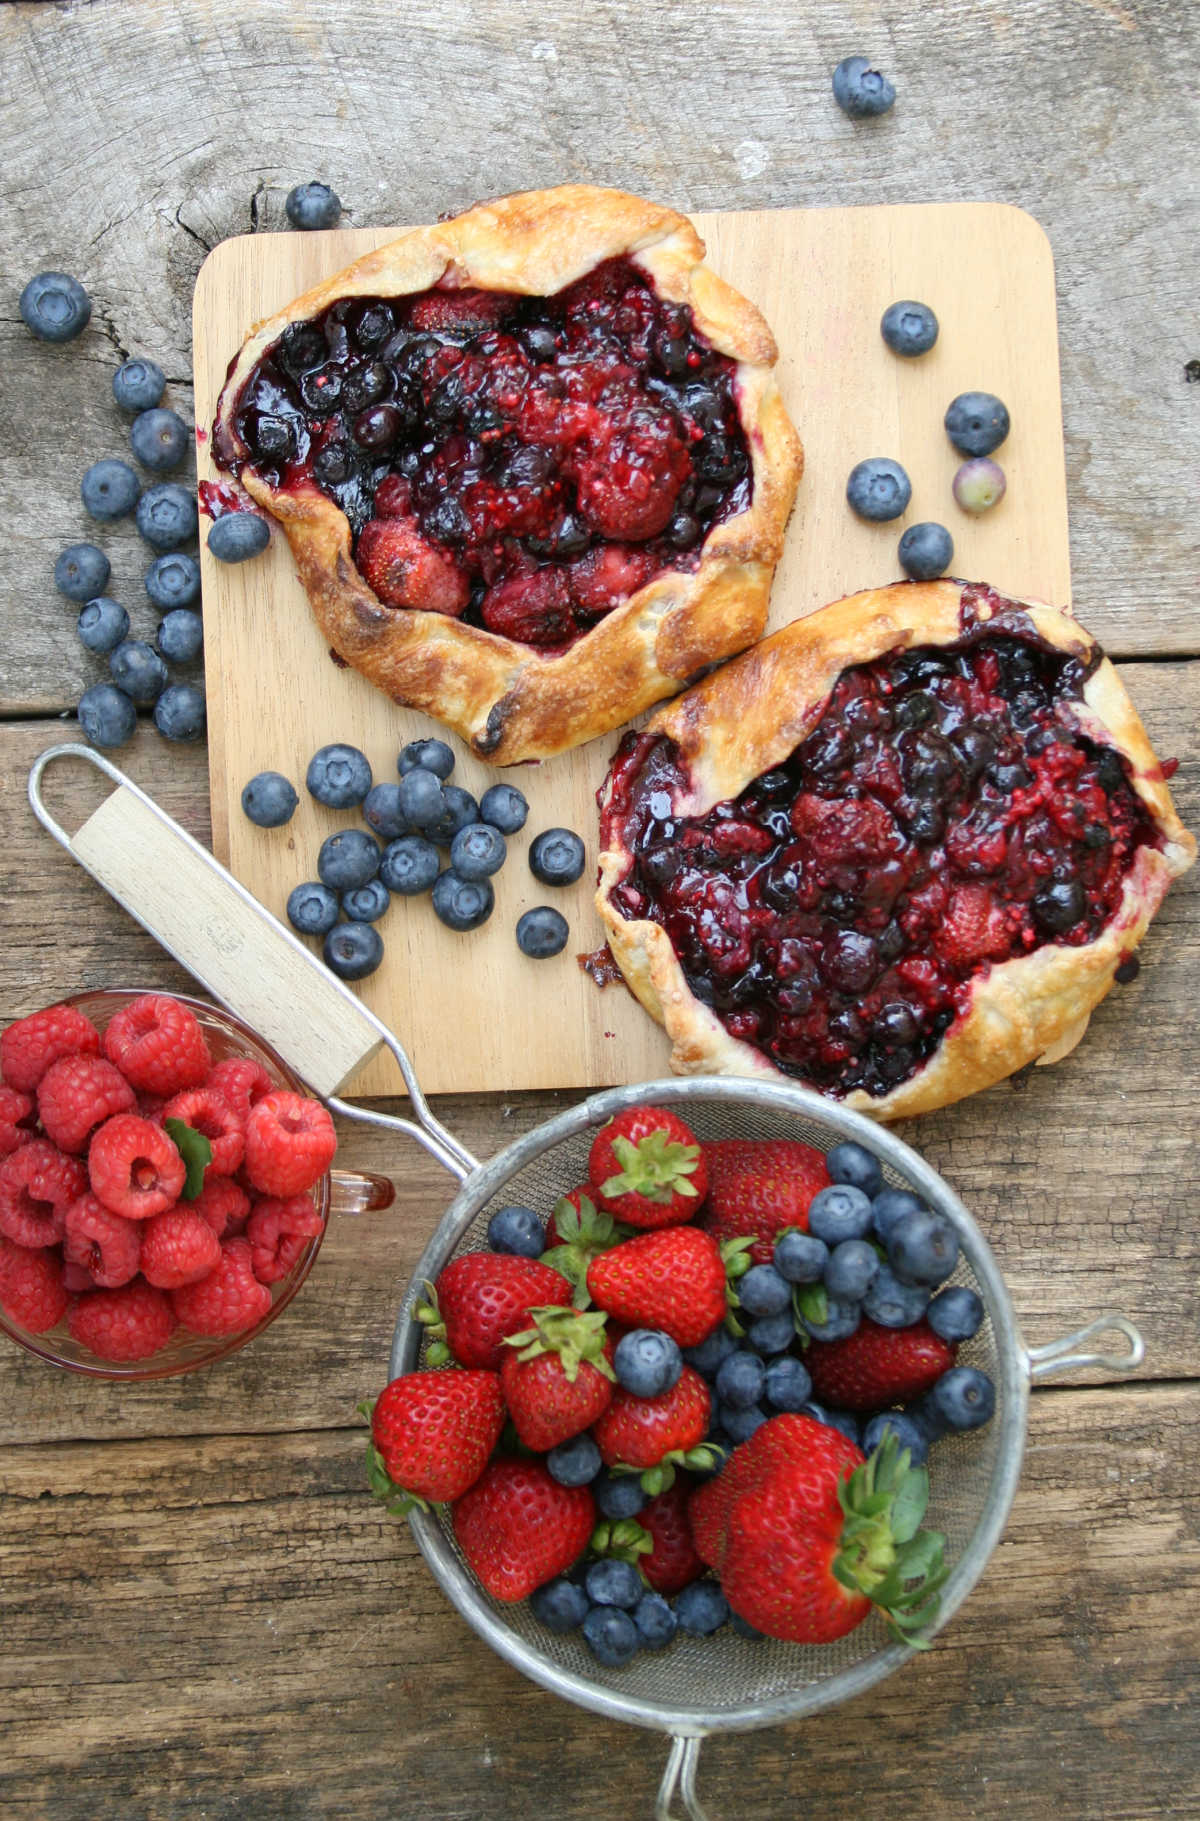 Berry galettes on wooden cutting board, strawberries, blueberries, raspberries in metal strainer.